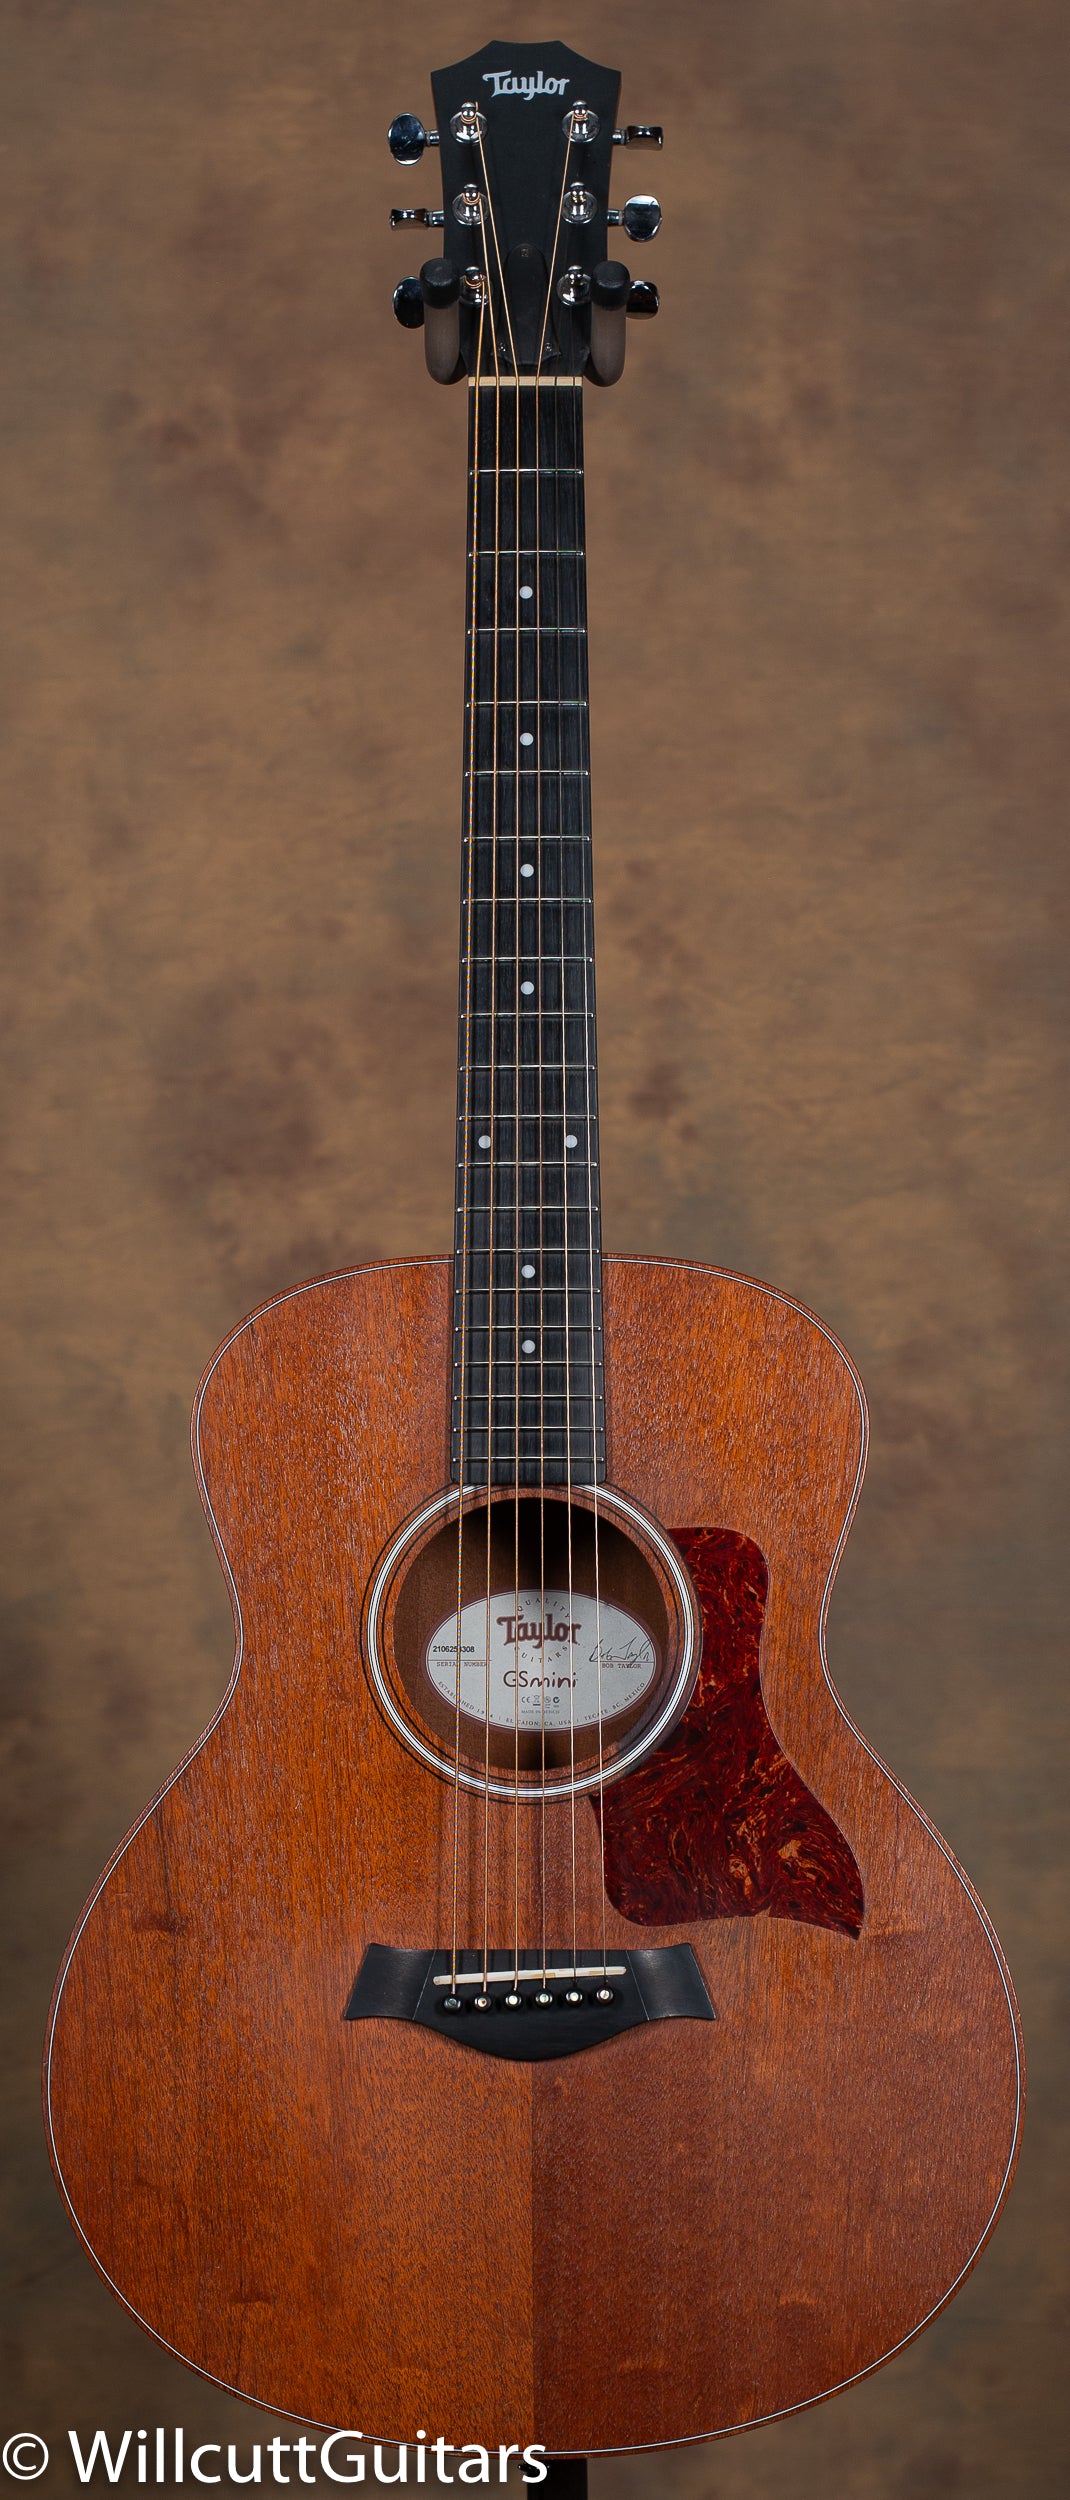 Taylor GS Mini Mahogany - Willcutt Guitars